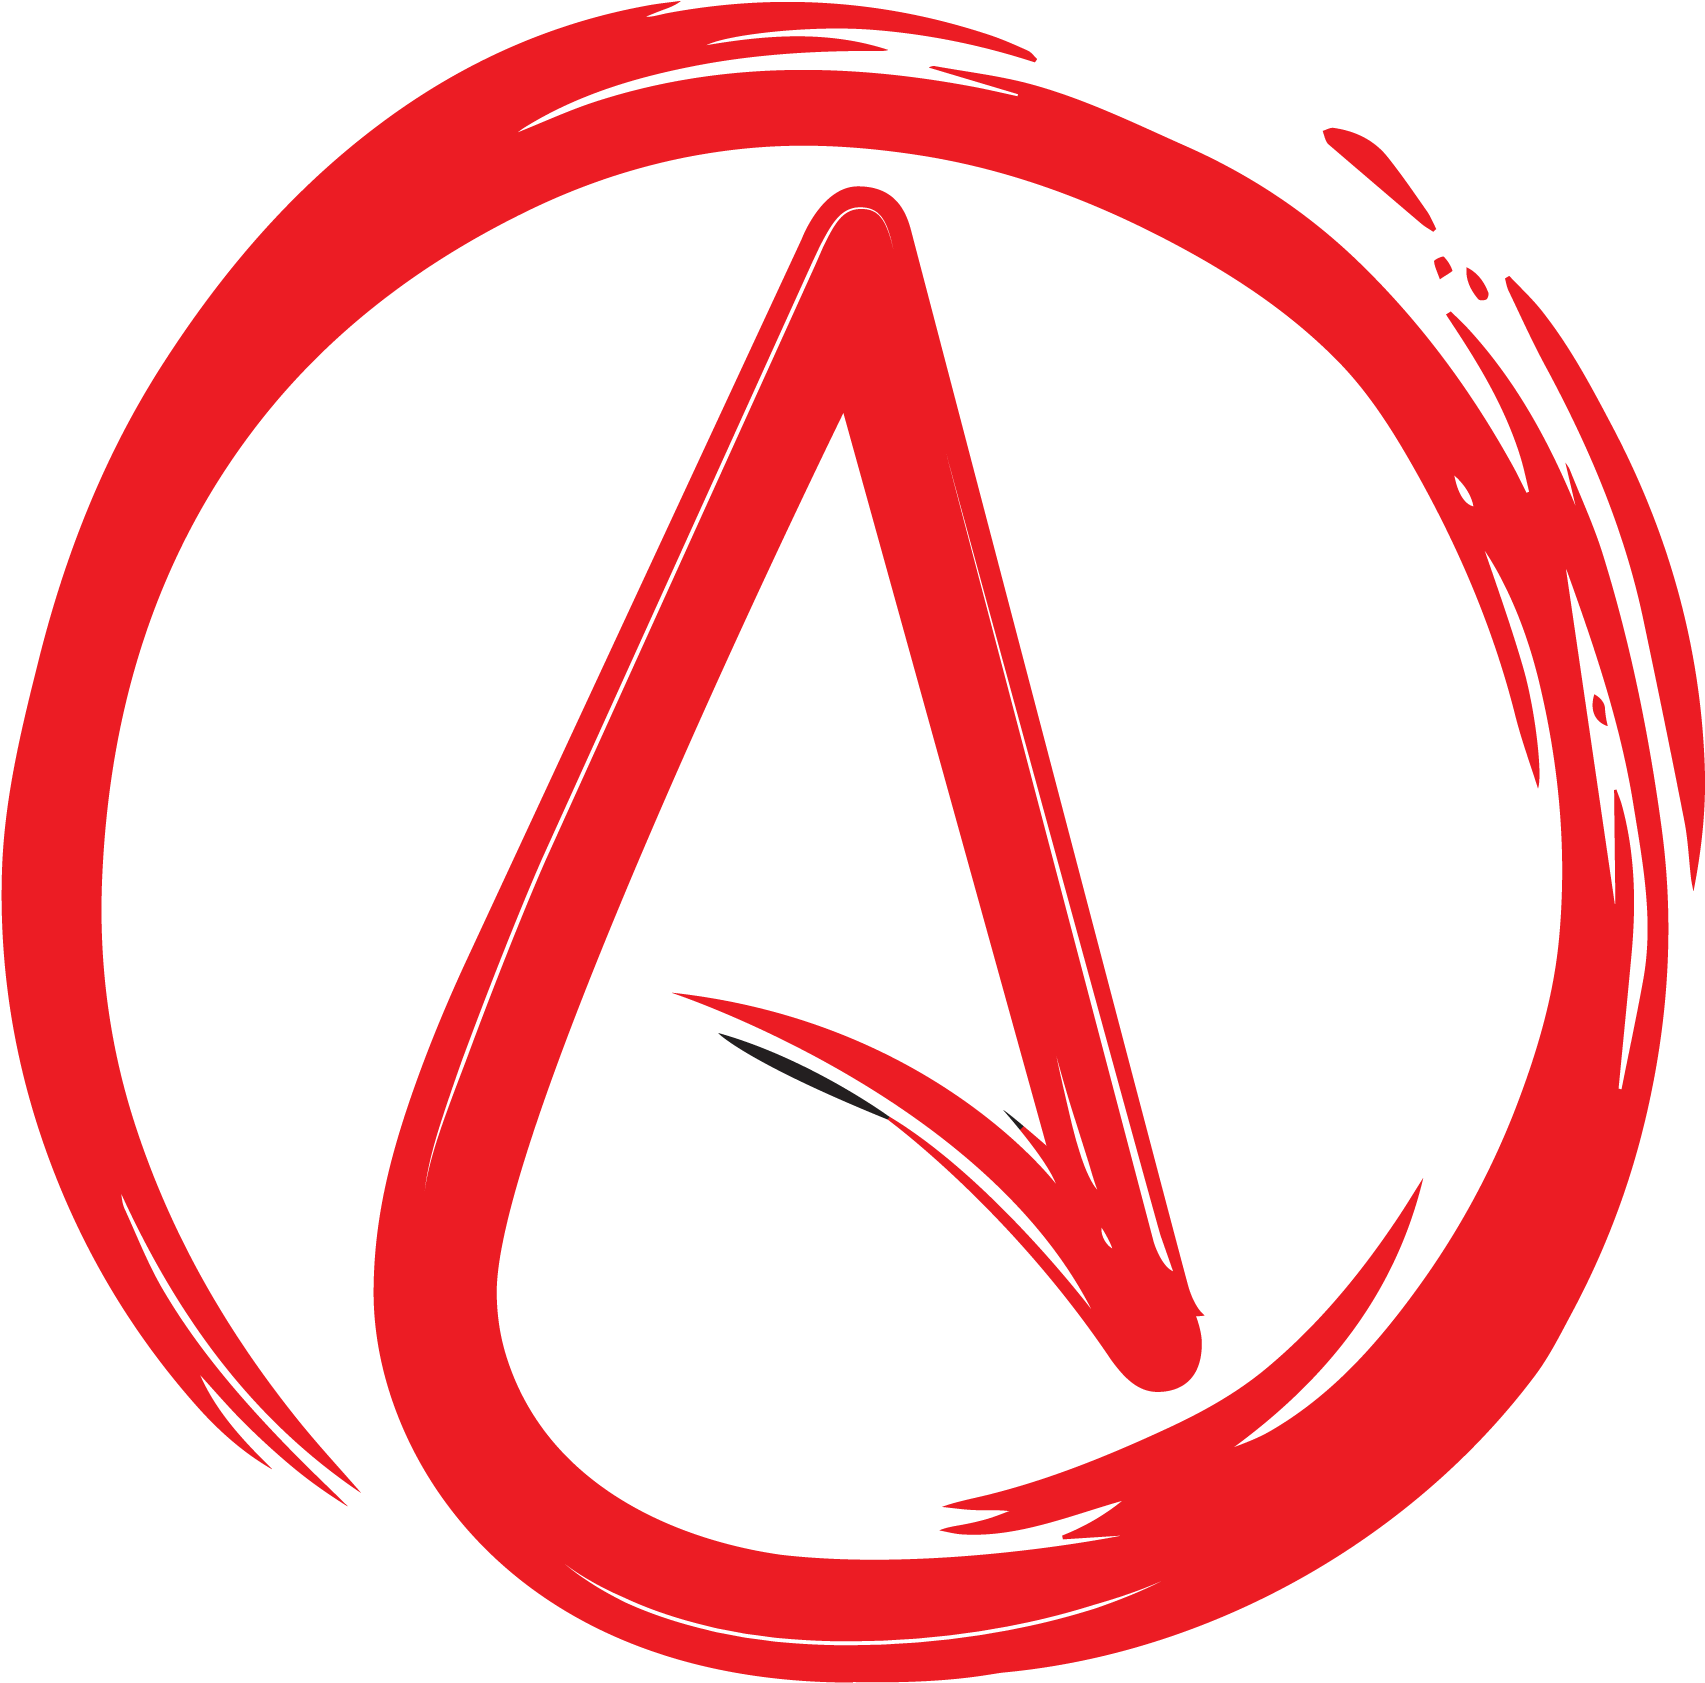 Atheist Alliance Of America Incubator For Secular Activists - Atheist Alliance Of America (1707x1691)